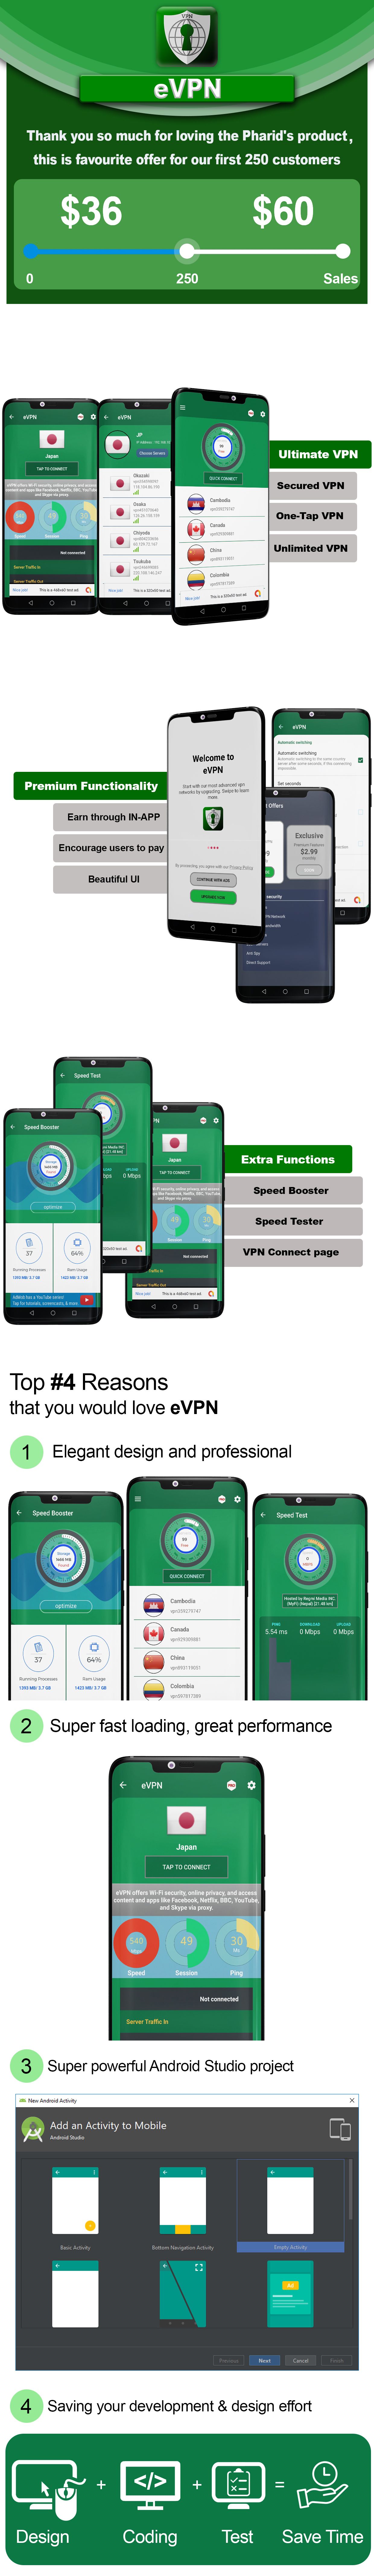 eVPN - Free Ultimate VPN | Android VPN, Billing, Phone Booster, Admob / Push Notification - 3